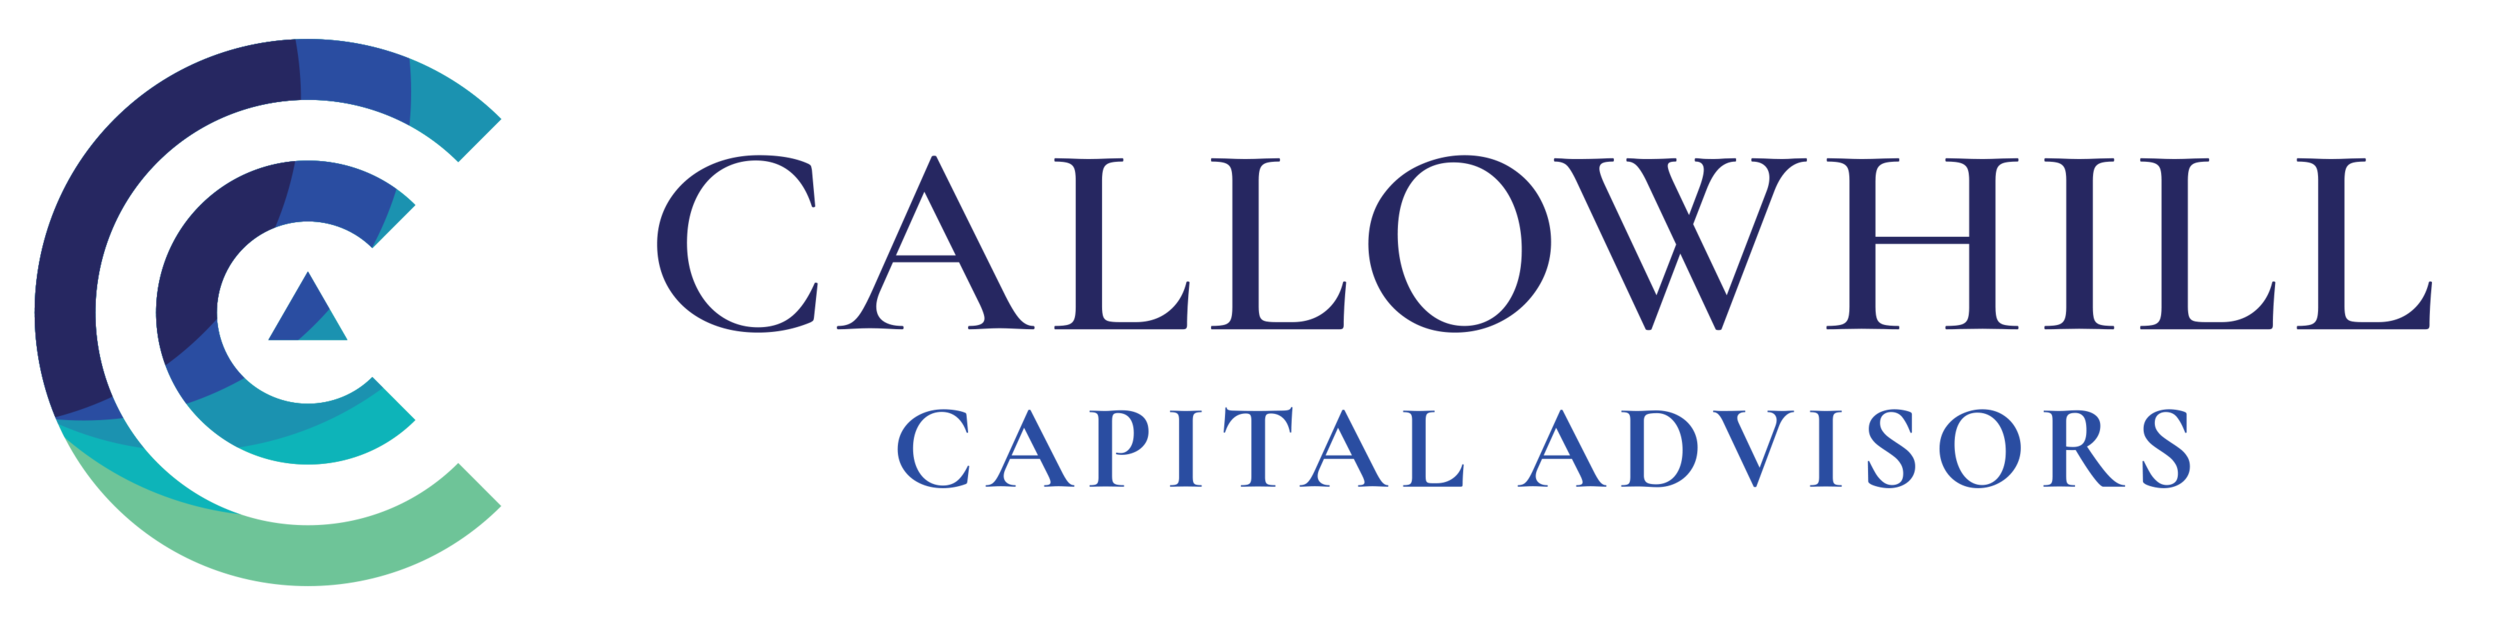 Callowhill Capital Advisors